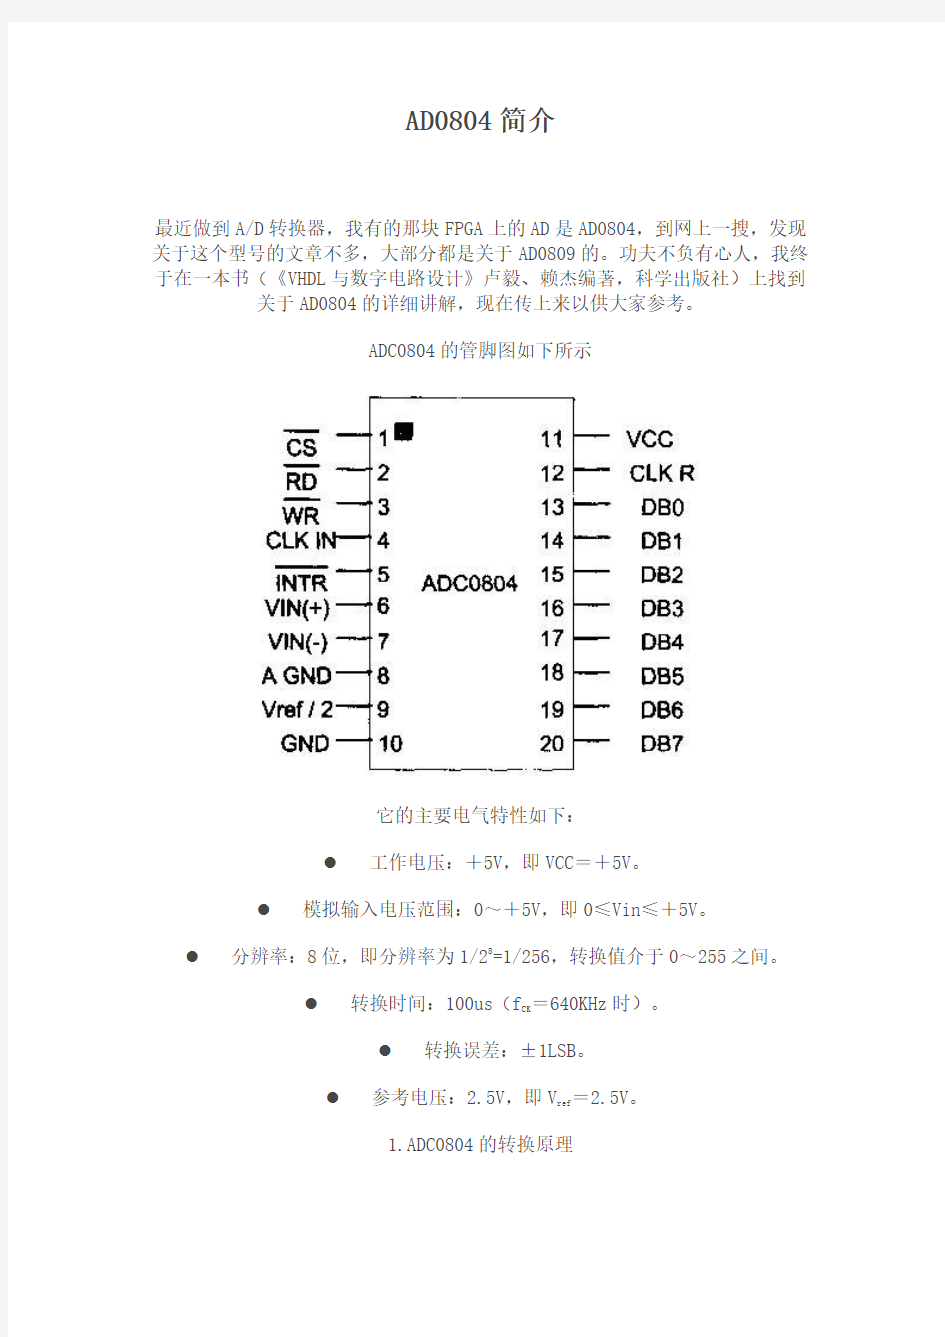 ADC0804中文资料